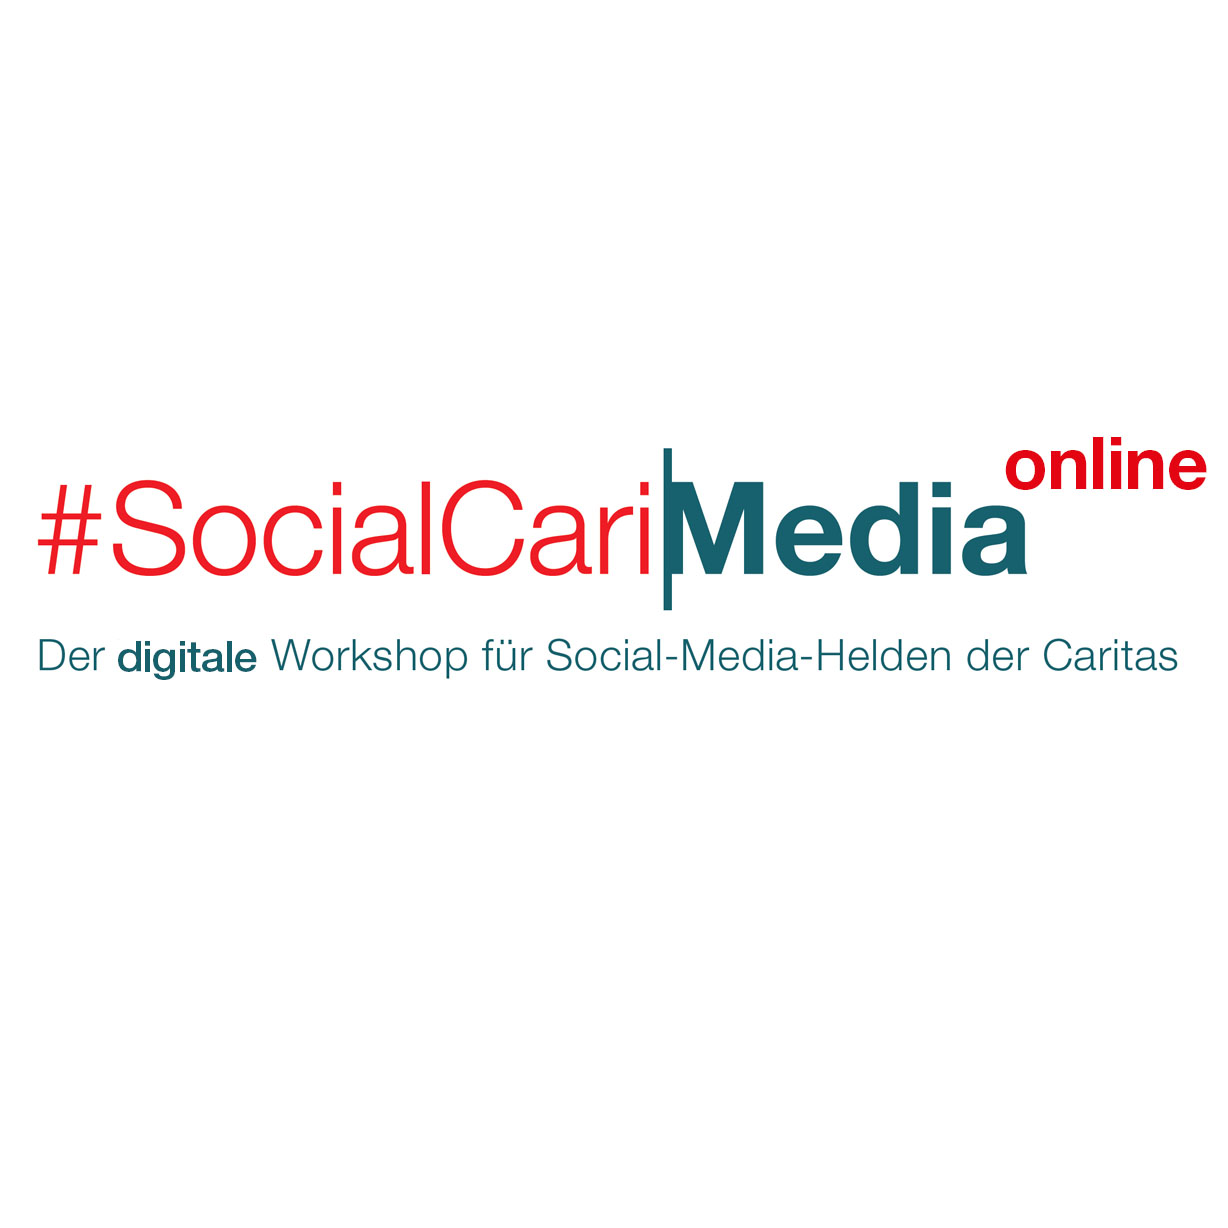 Save the Date: #SocialCariMedia goes online – Termine für 2021 stehen fest